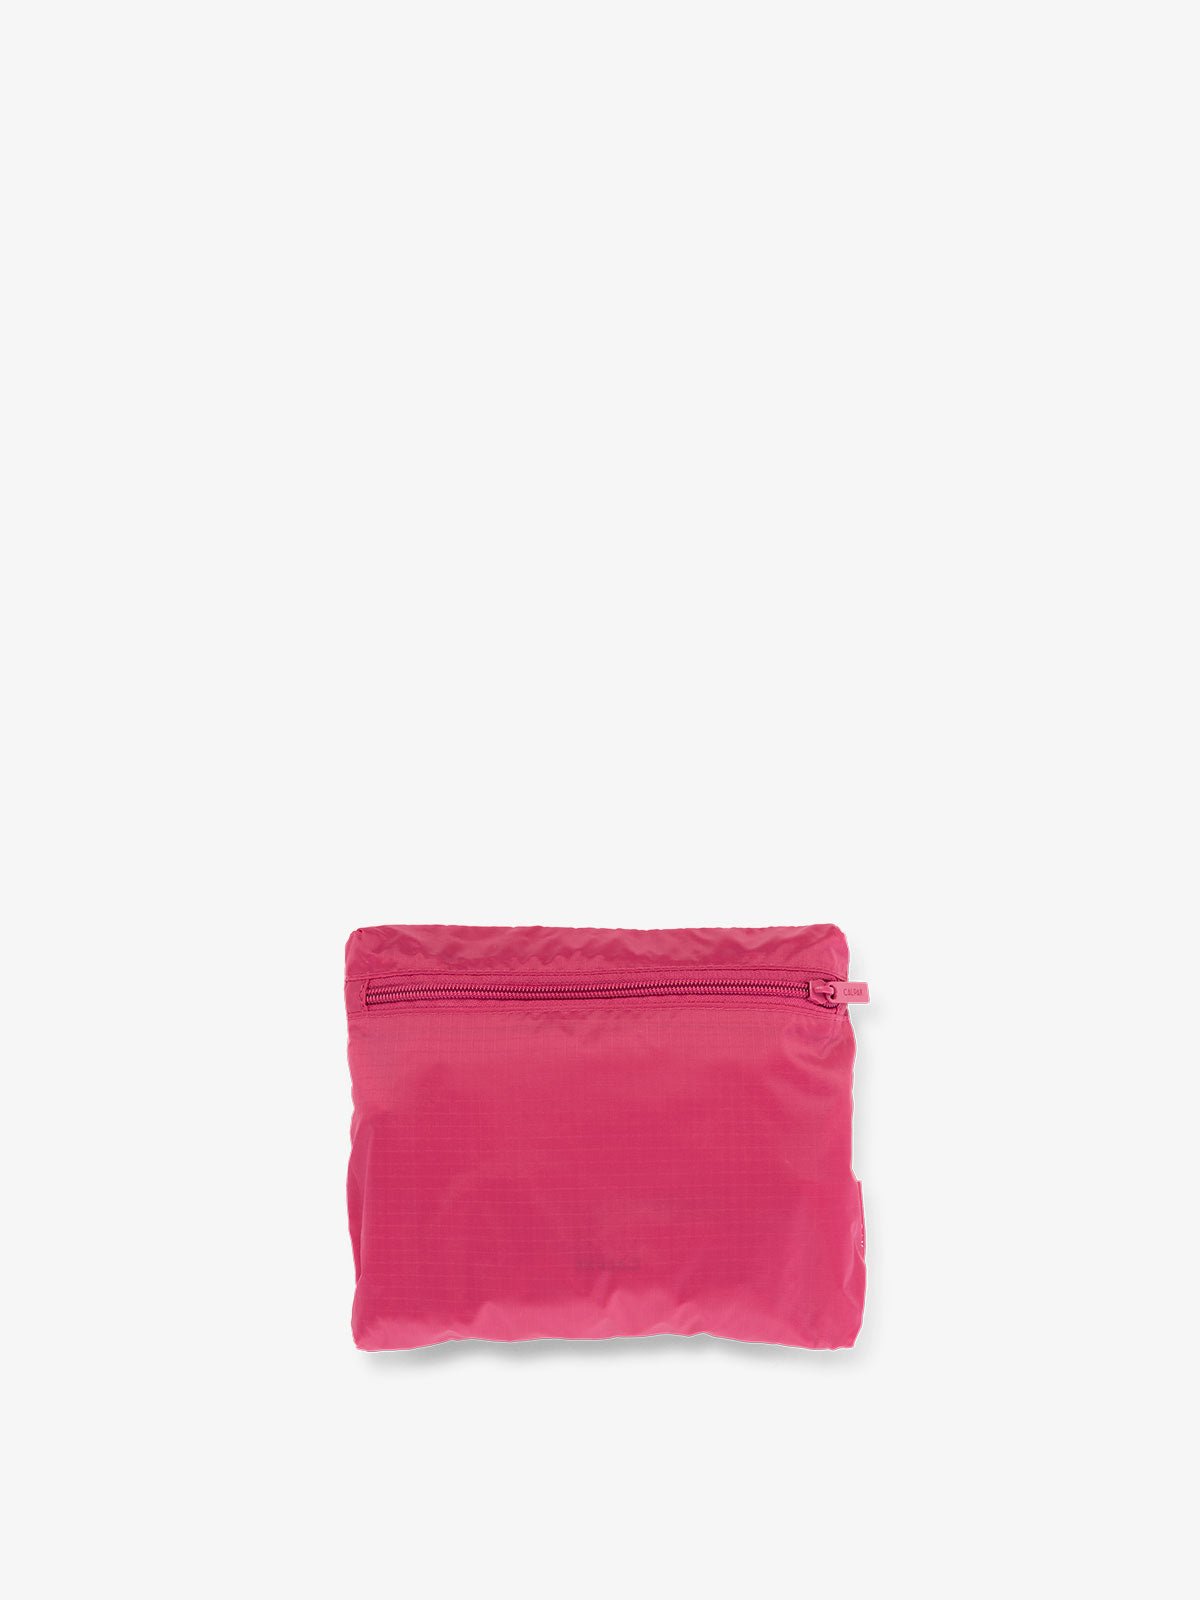 CALPAK Compakt foldable duffle bag for travel in dragonfruit pink